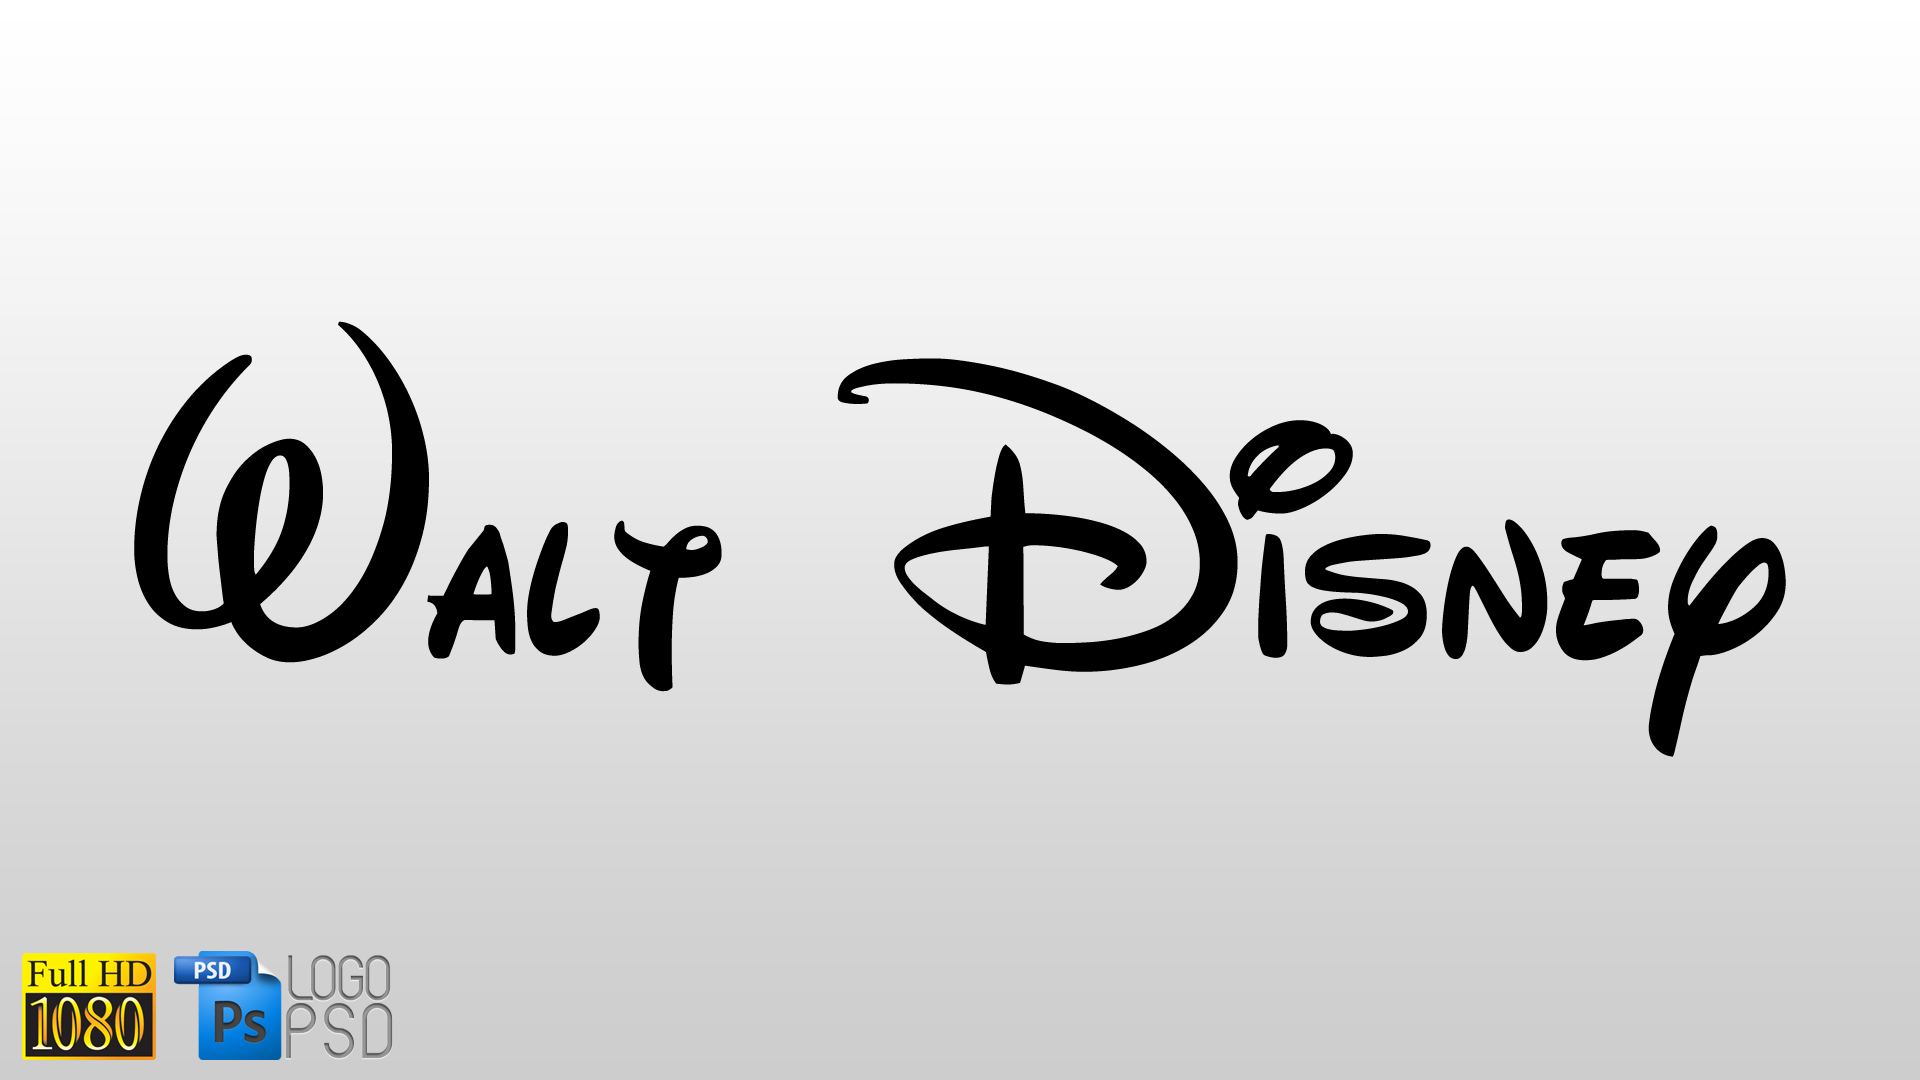 Walt Disney Logo PSD by iampxr on DeviantArt